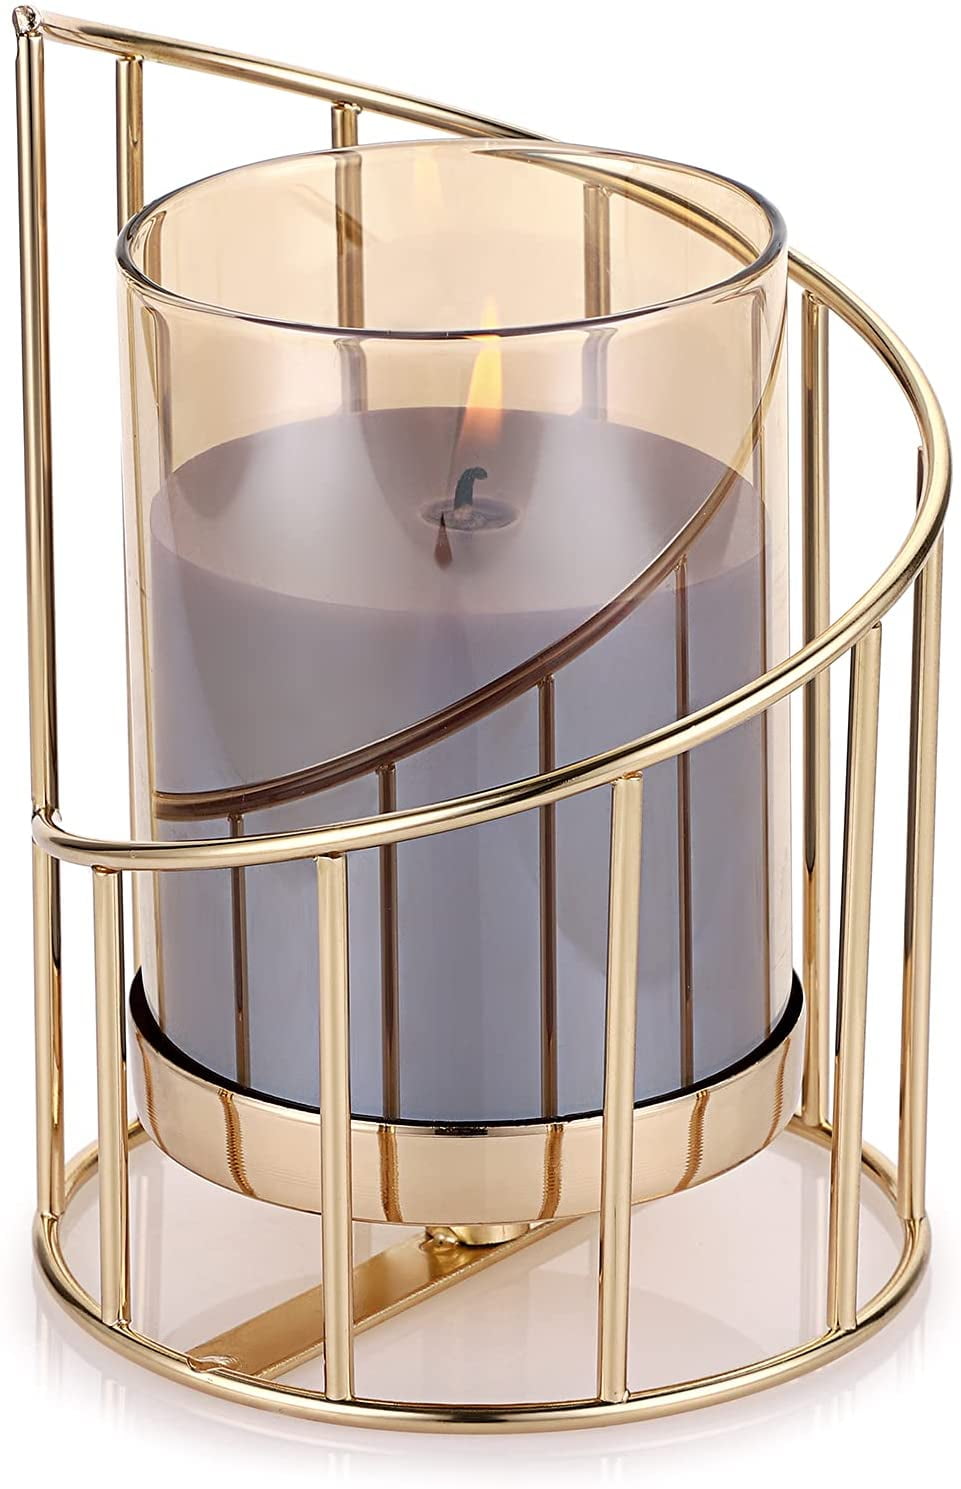 1x Wedding Geometric Copper Gold Tea Light Holder Candle Holder Lantern Decor 